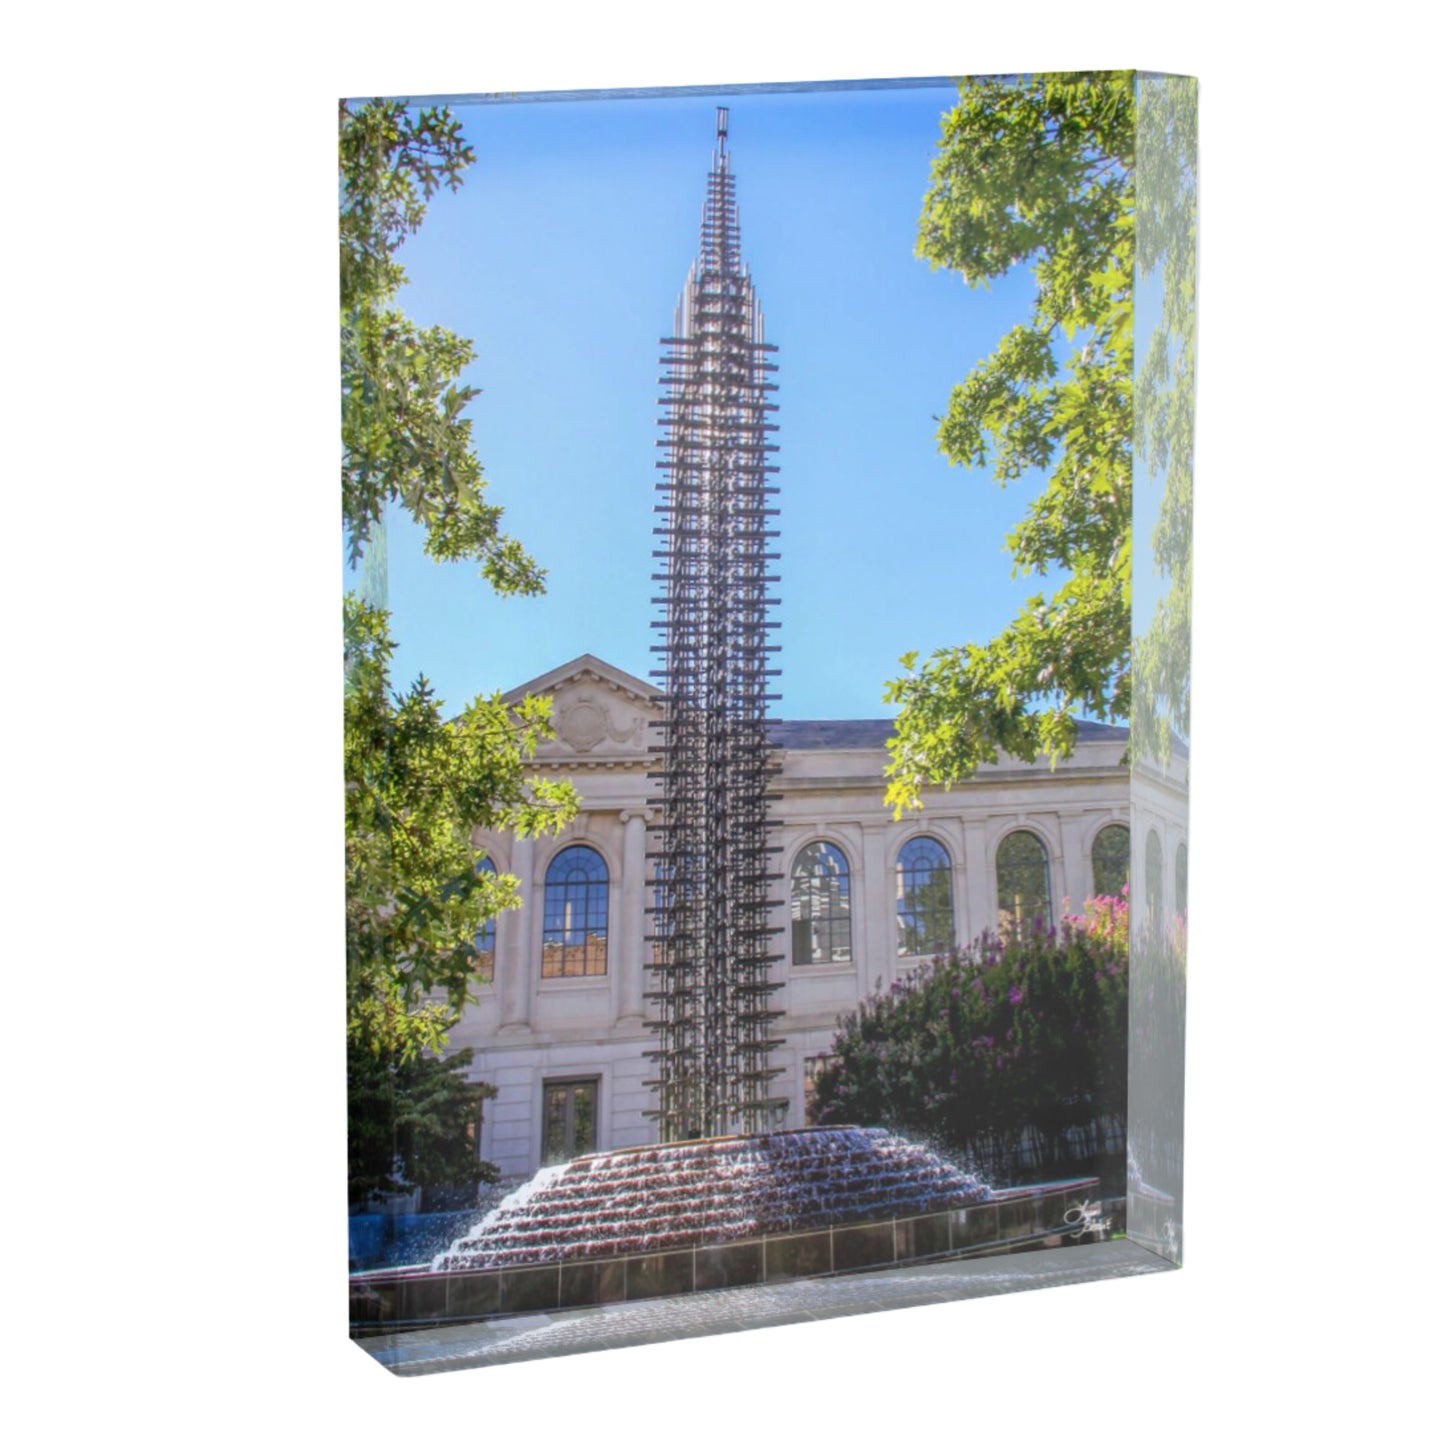 5x7 acrylic block of fulbright peace fountain perfect for University of Arkansas graduate